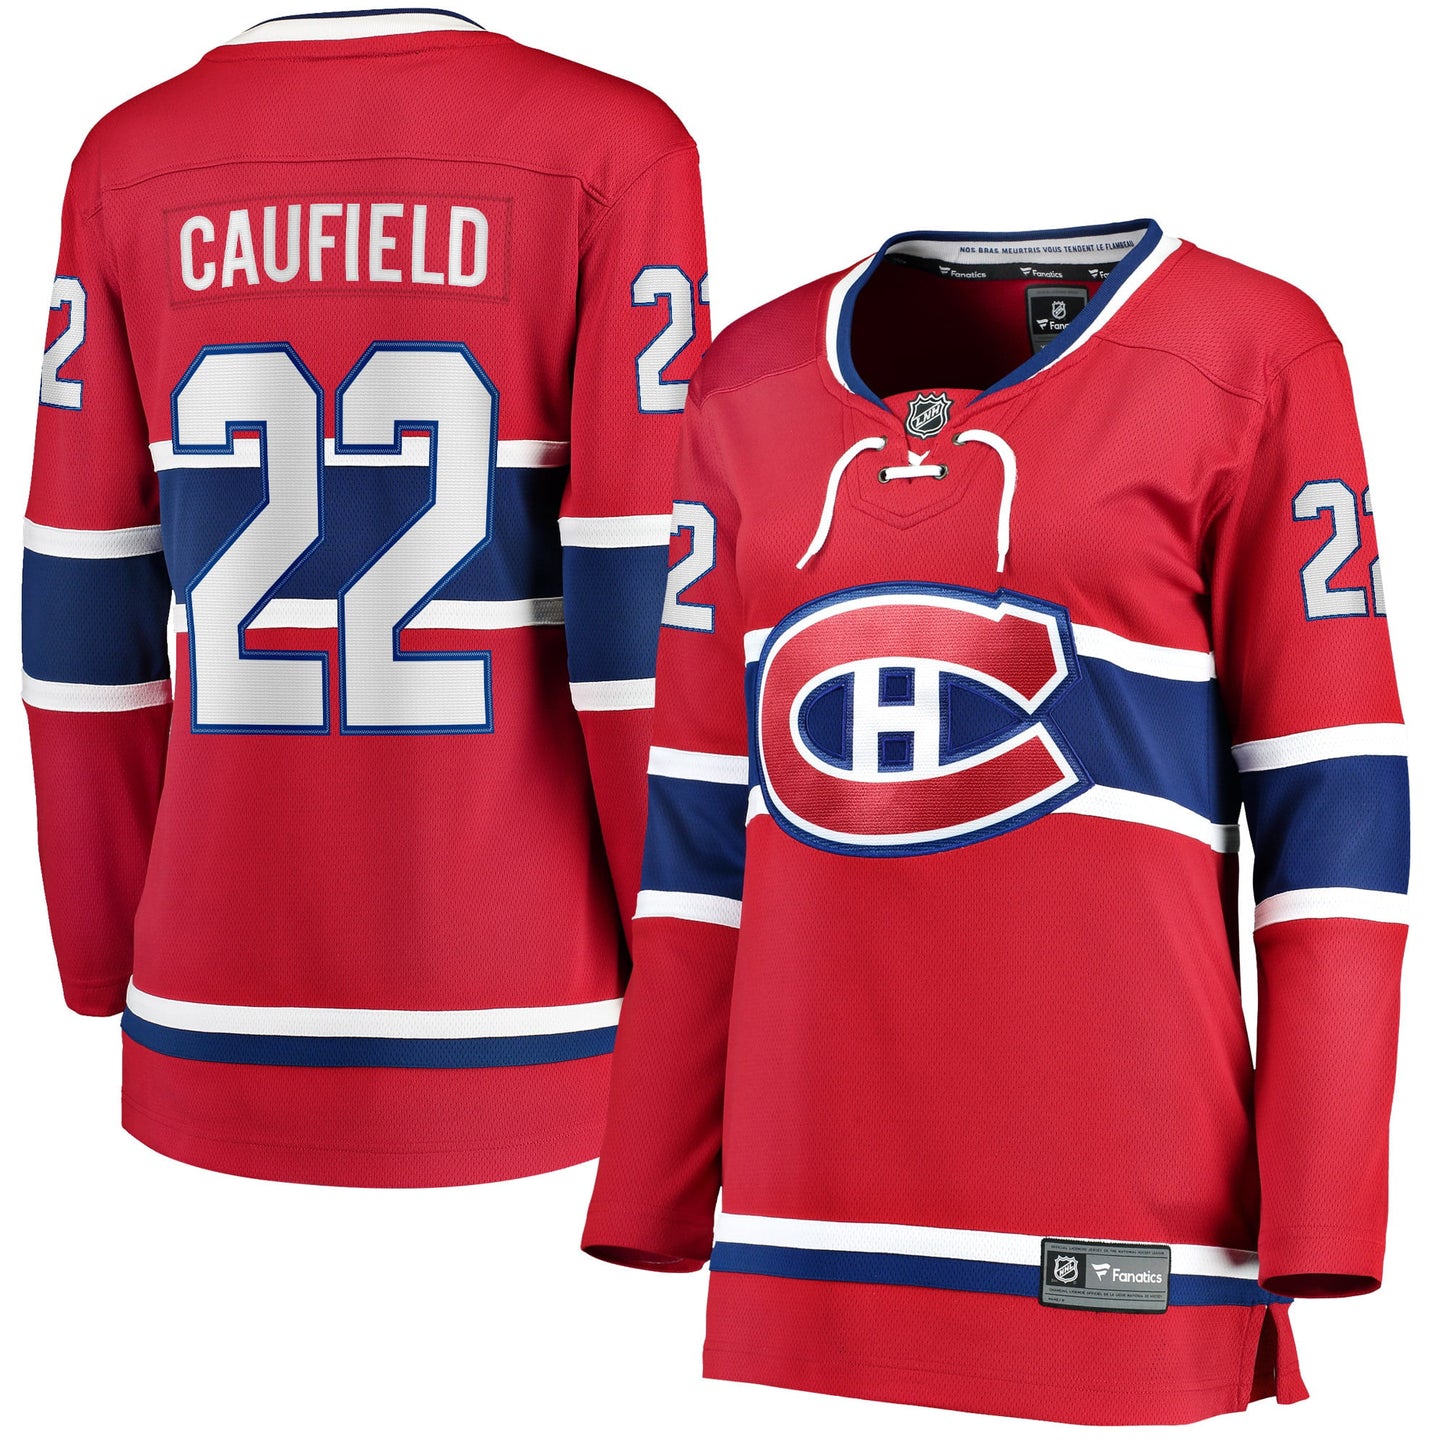 Women's Fanatics Branded Cole Caufield Red Montreal Canadiens Home Breakaway Replica Jersey